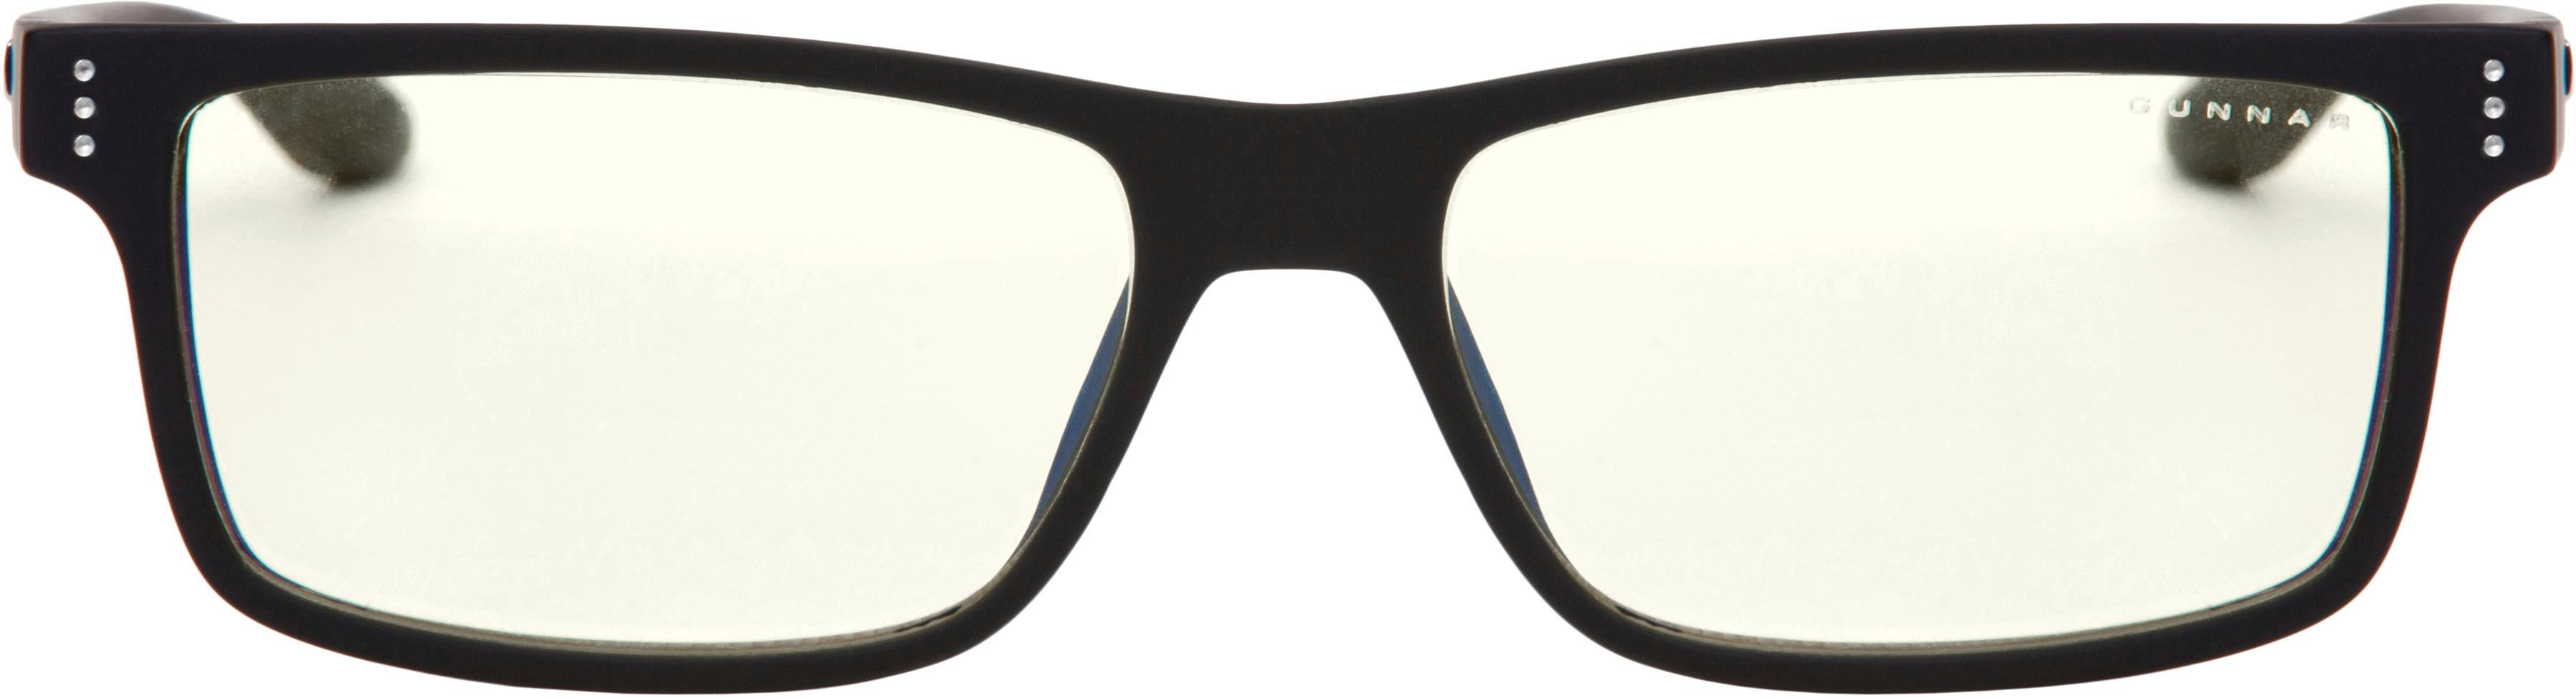 Angle View: GUNNAR - Blue Light Reading Glasses - Vertex +1.0 - Onyx